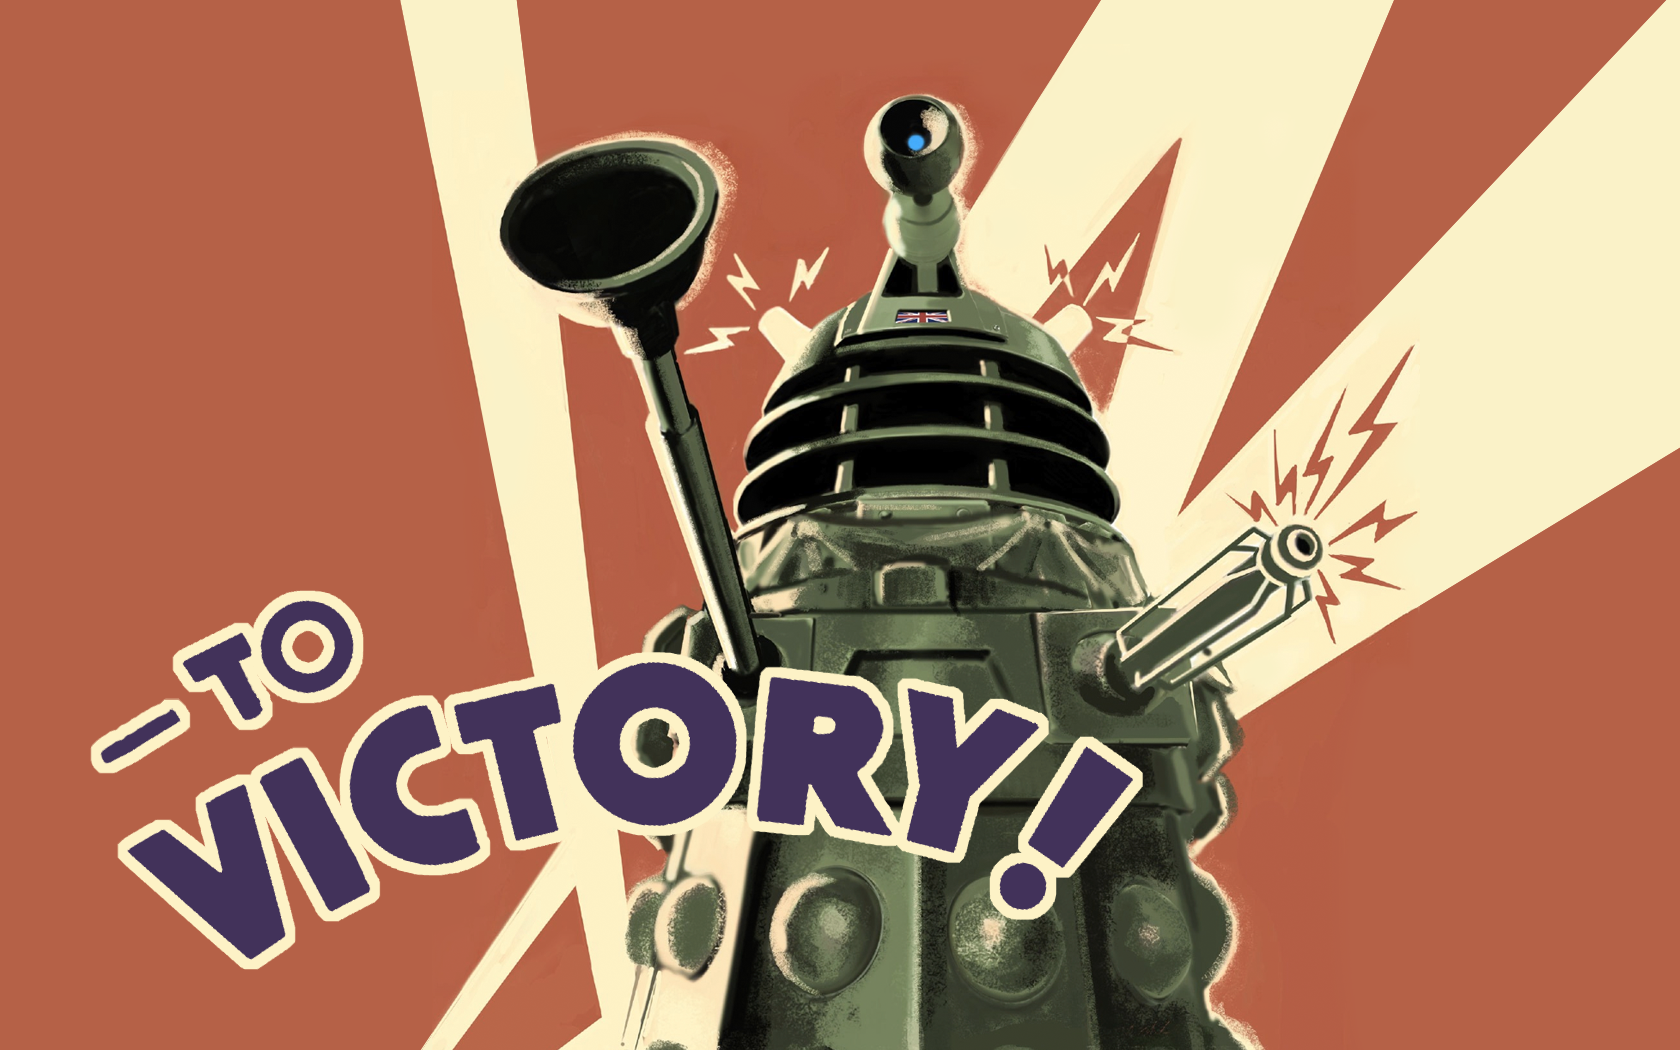 Victory Dalek Wallpaper